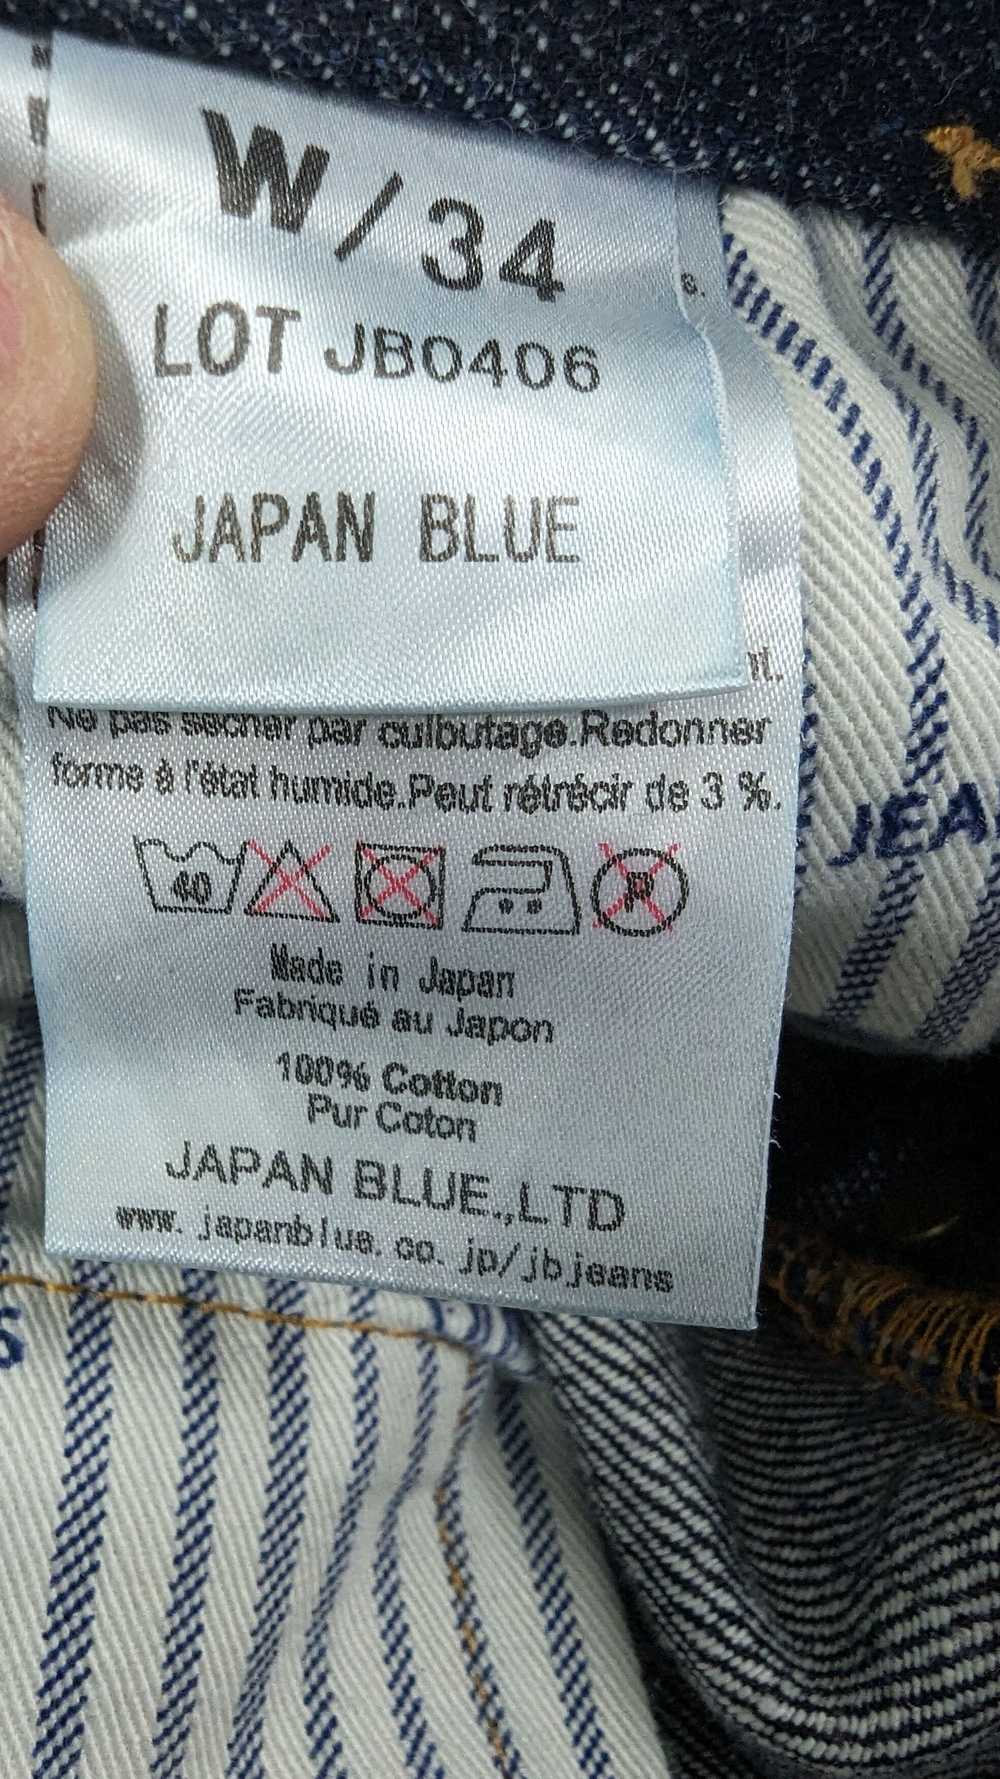 Japan Blue Japan Blue Denim Jeans JB0406 - image 4